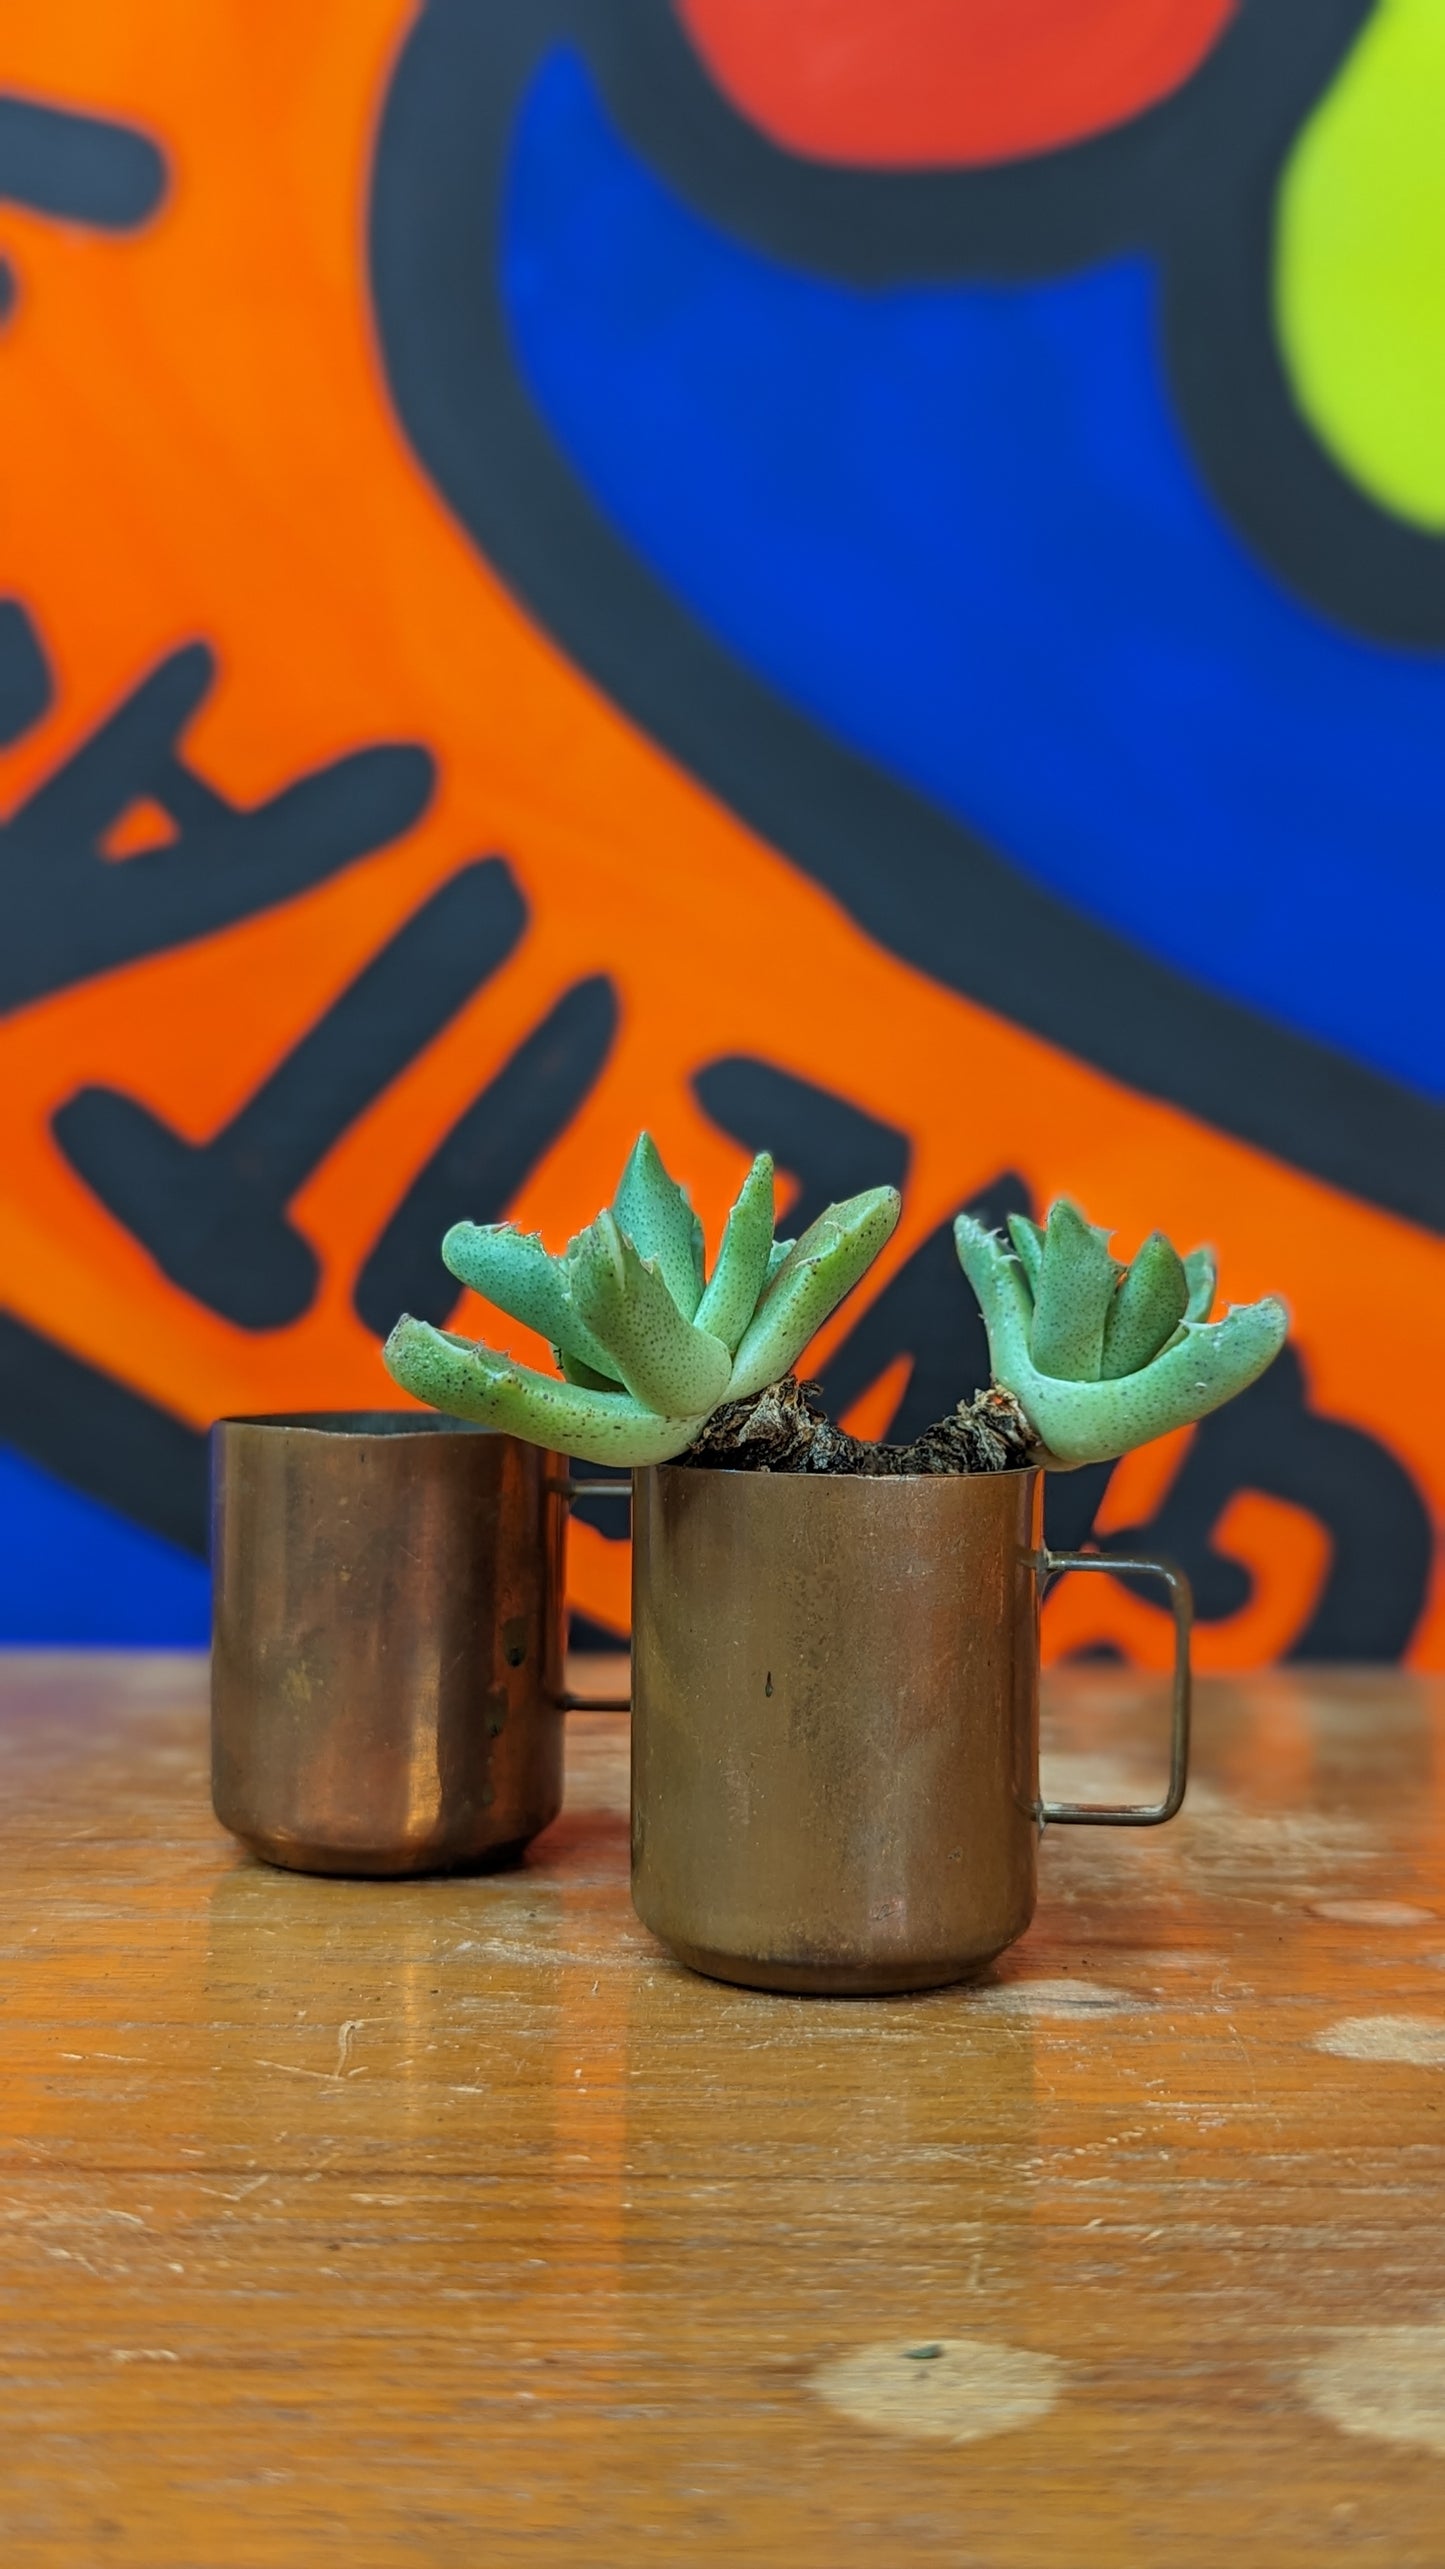 Vintage tiny copper mugs set of 2